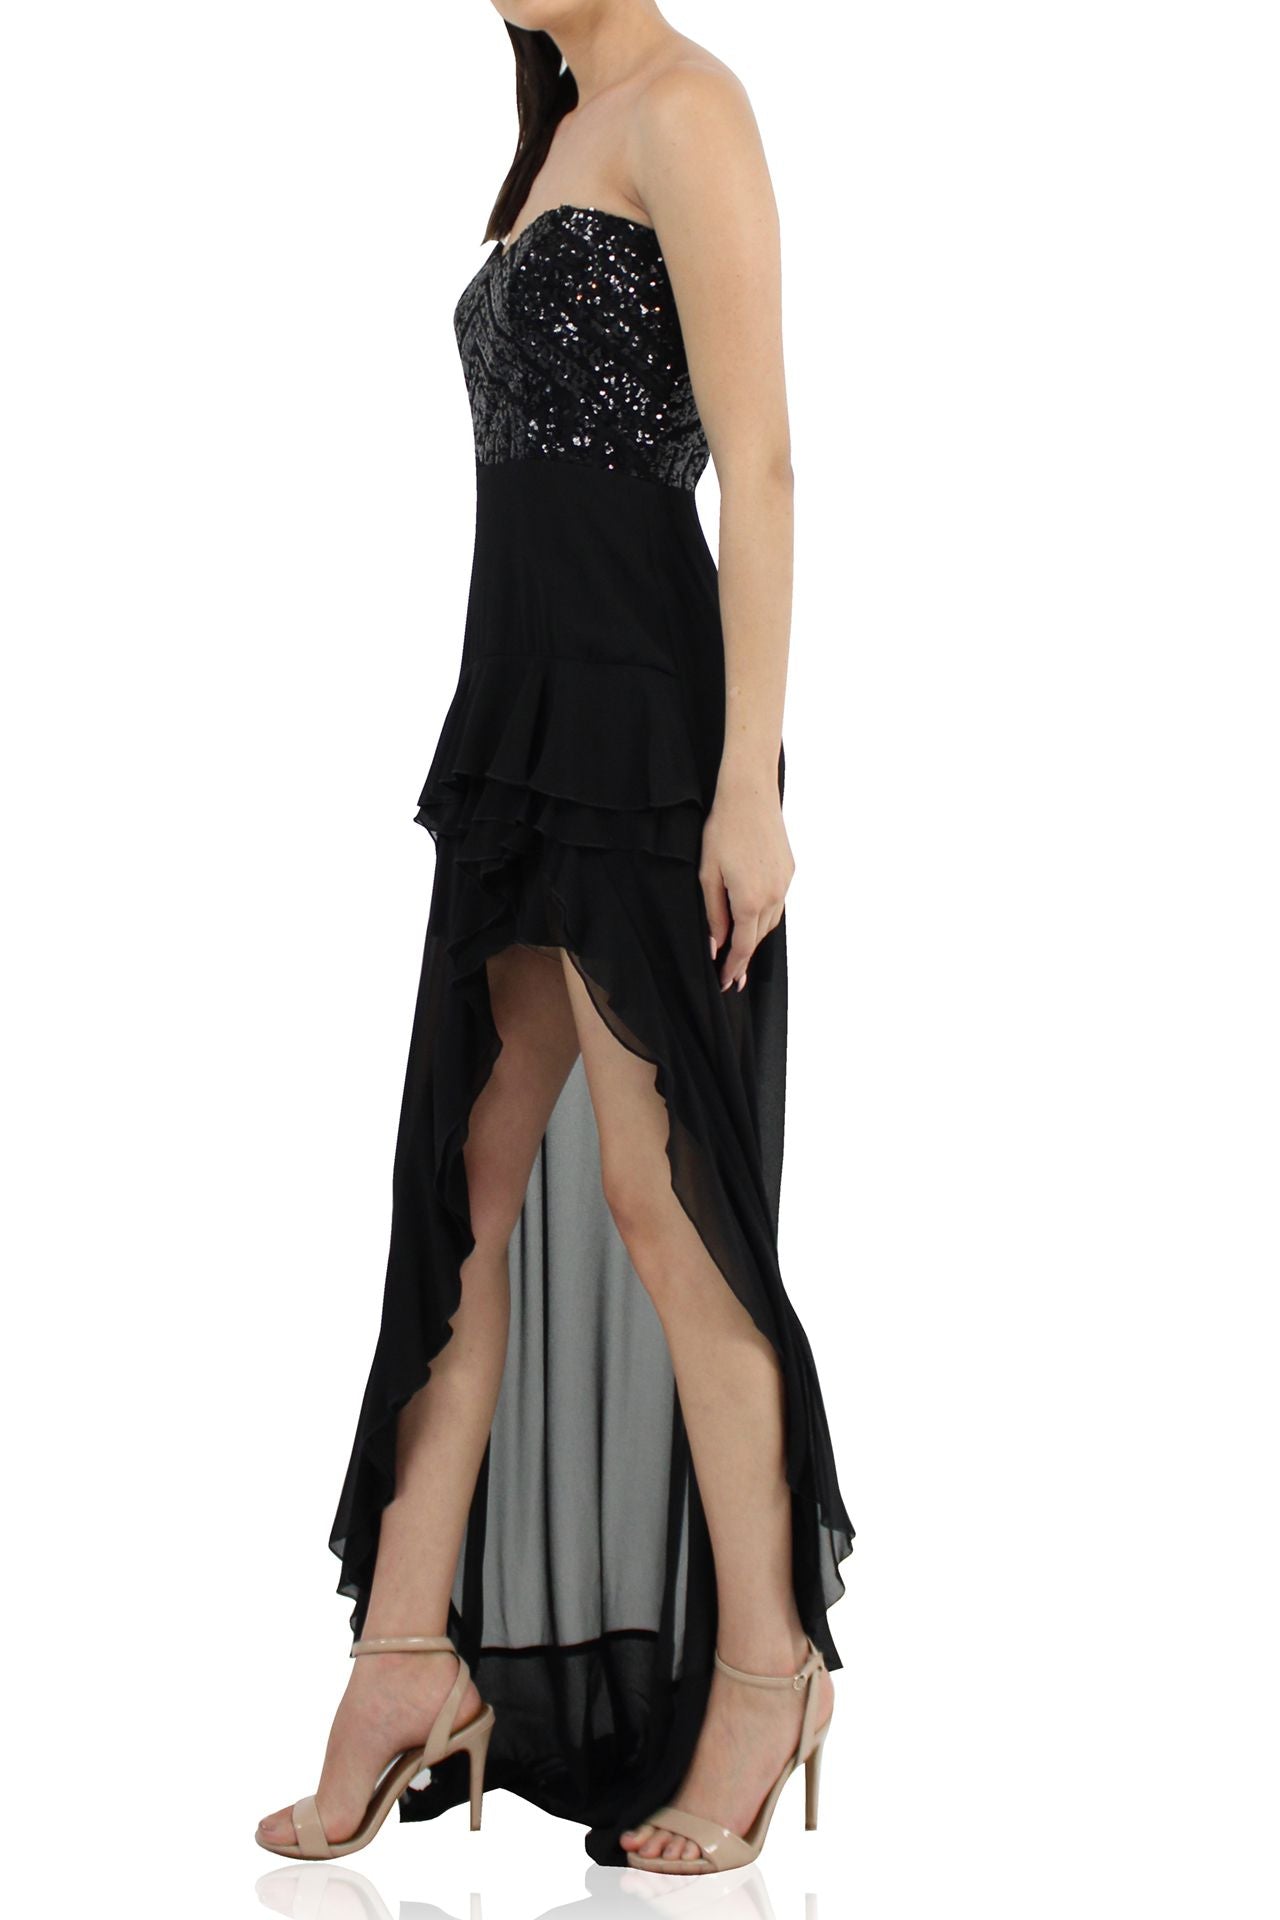 "black high and low dress" "Kyle X Shahida" "black sequin dress strapless" "black sequin party dress"